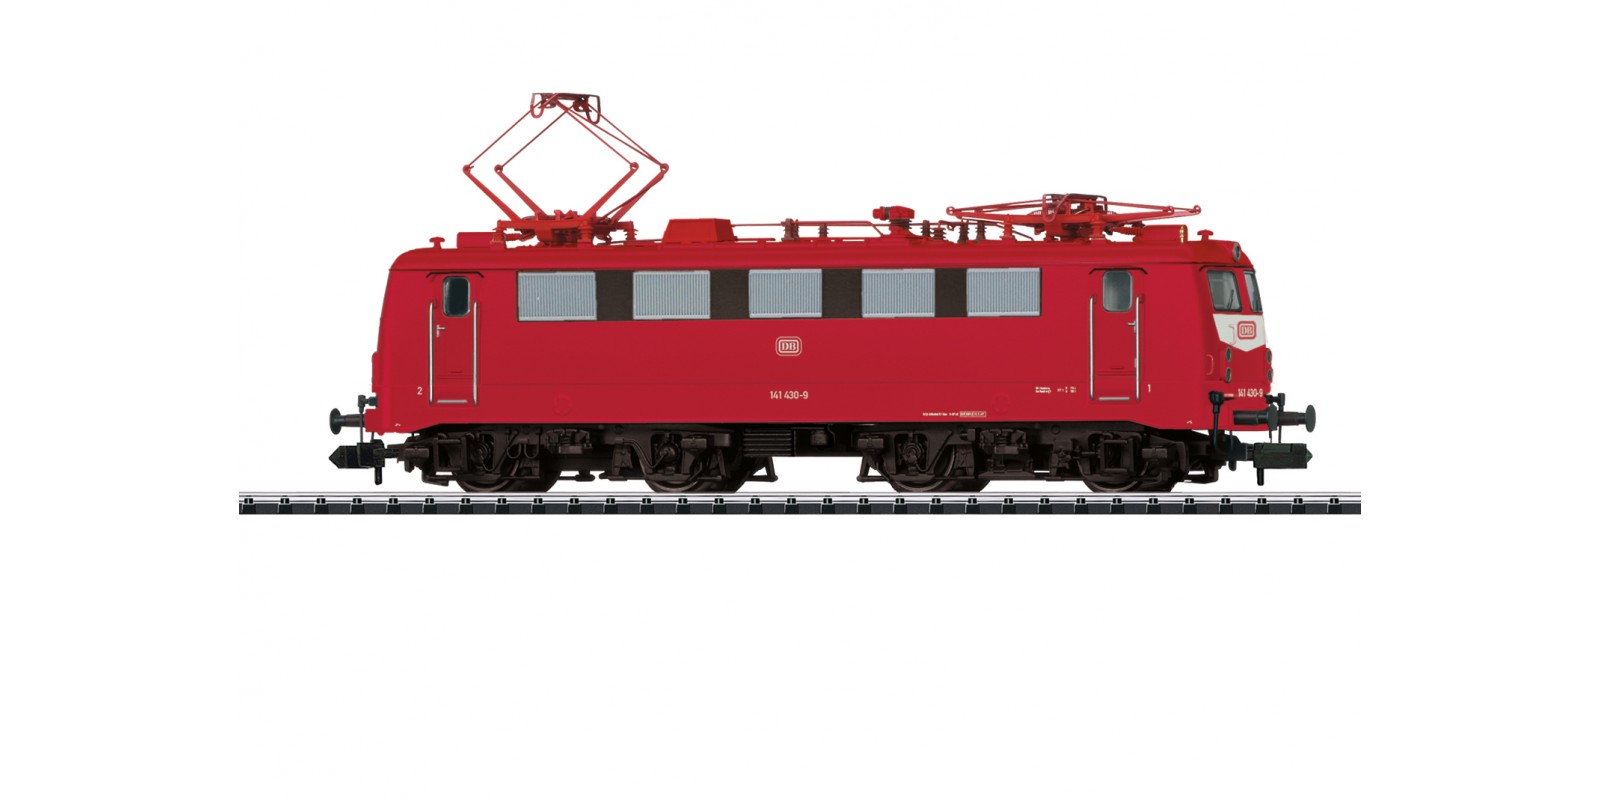 T16144 Class 141 electric locomotive